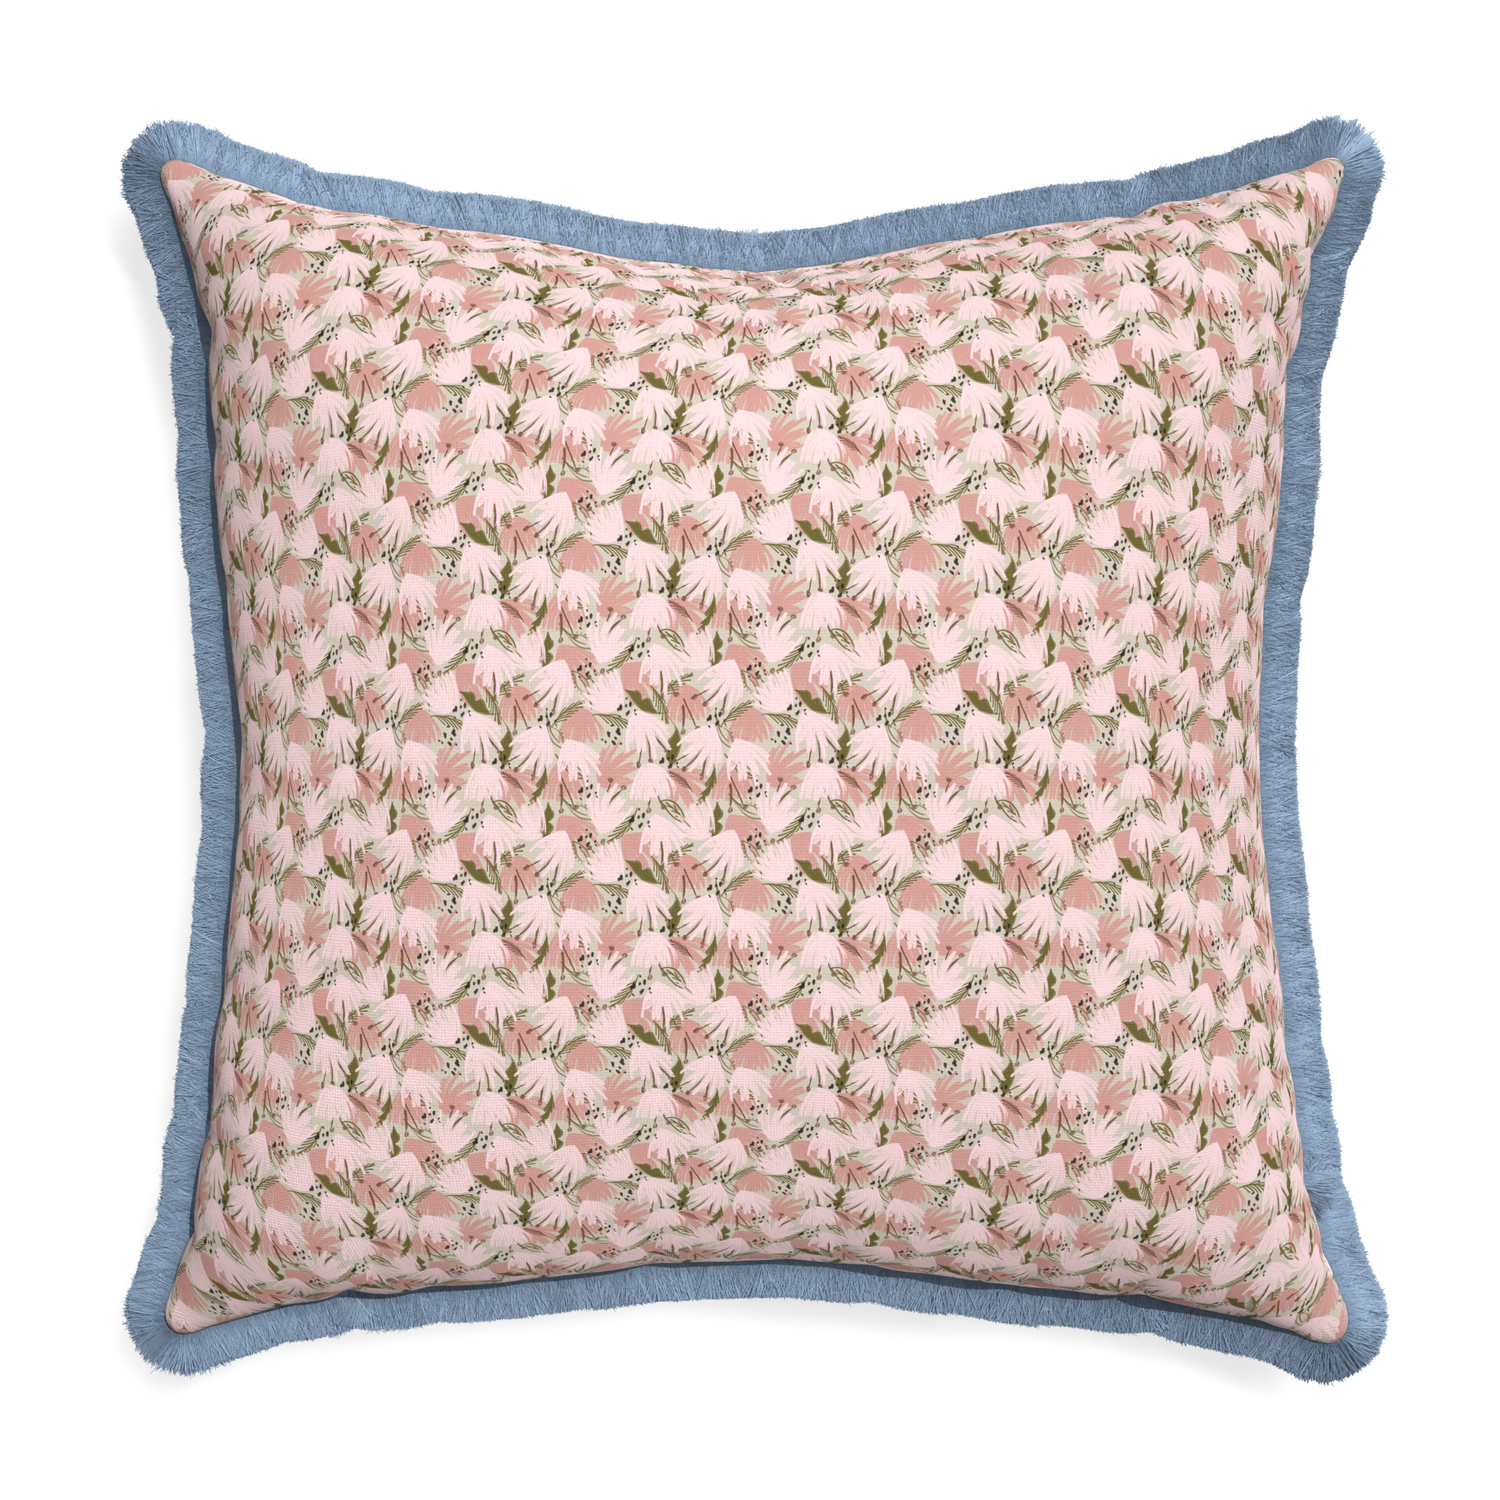 Euro-sham eden pink custom pillow with sky fringe on white background